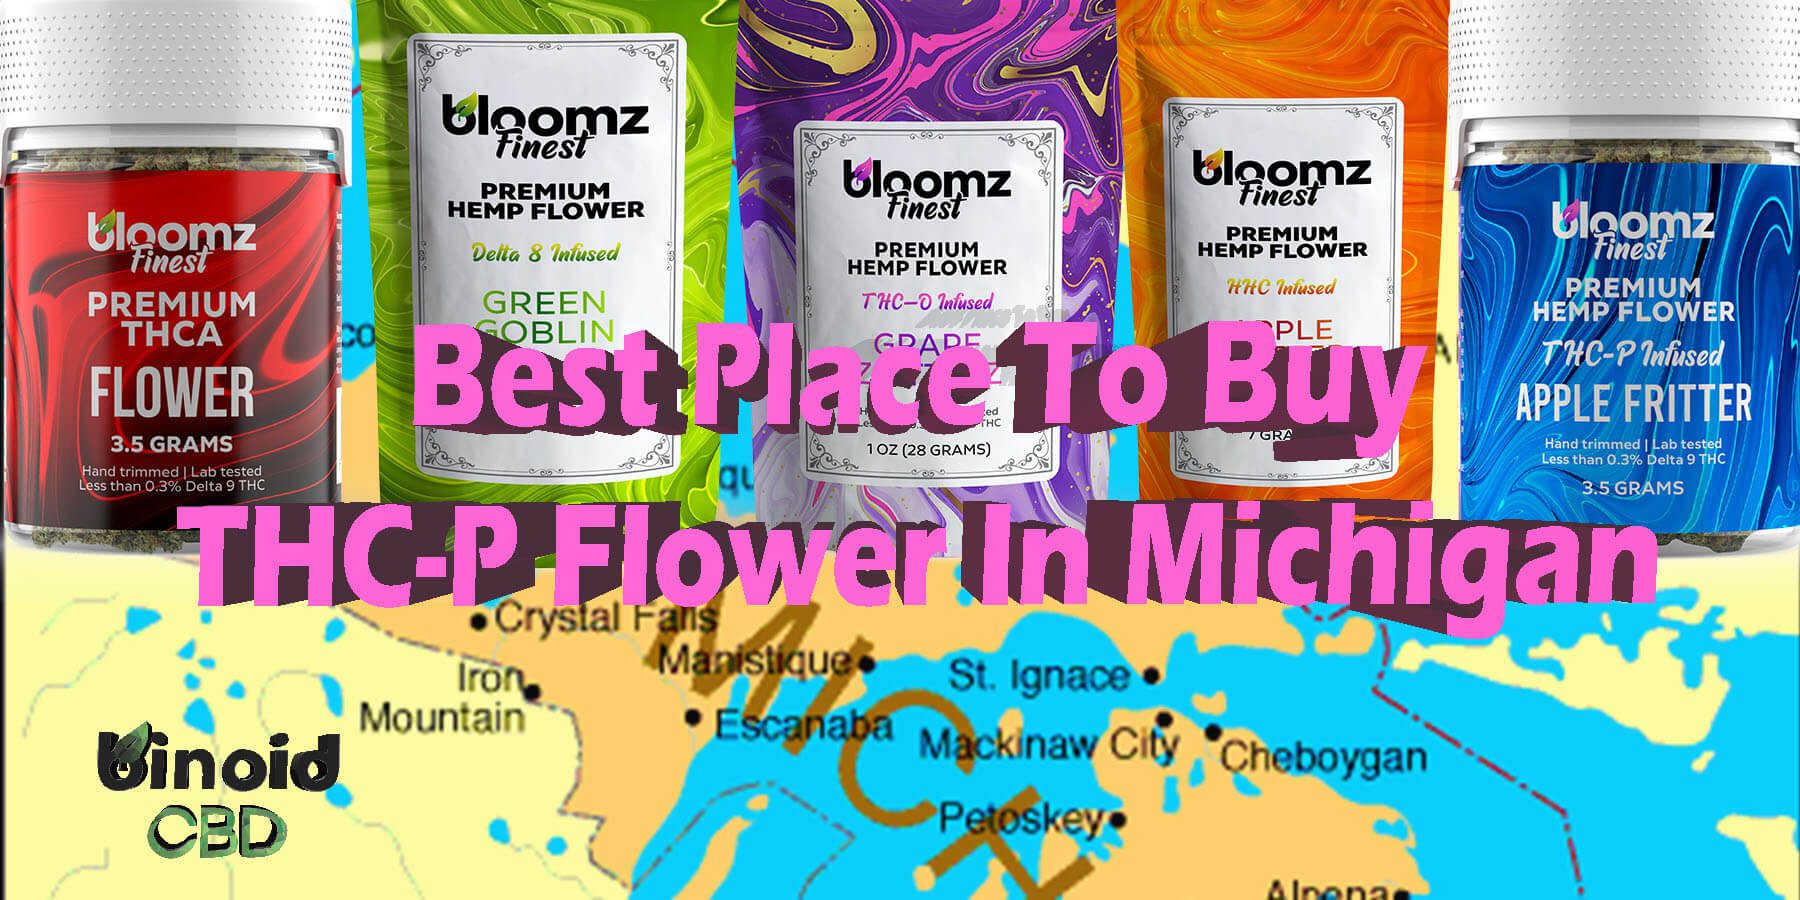 Buy THCP Hemp Flower Michigan Get Online Near Me For Sale Best Brand Strongest Real Legal Store Shop Reddit